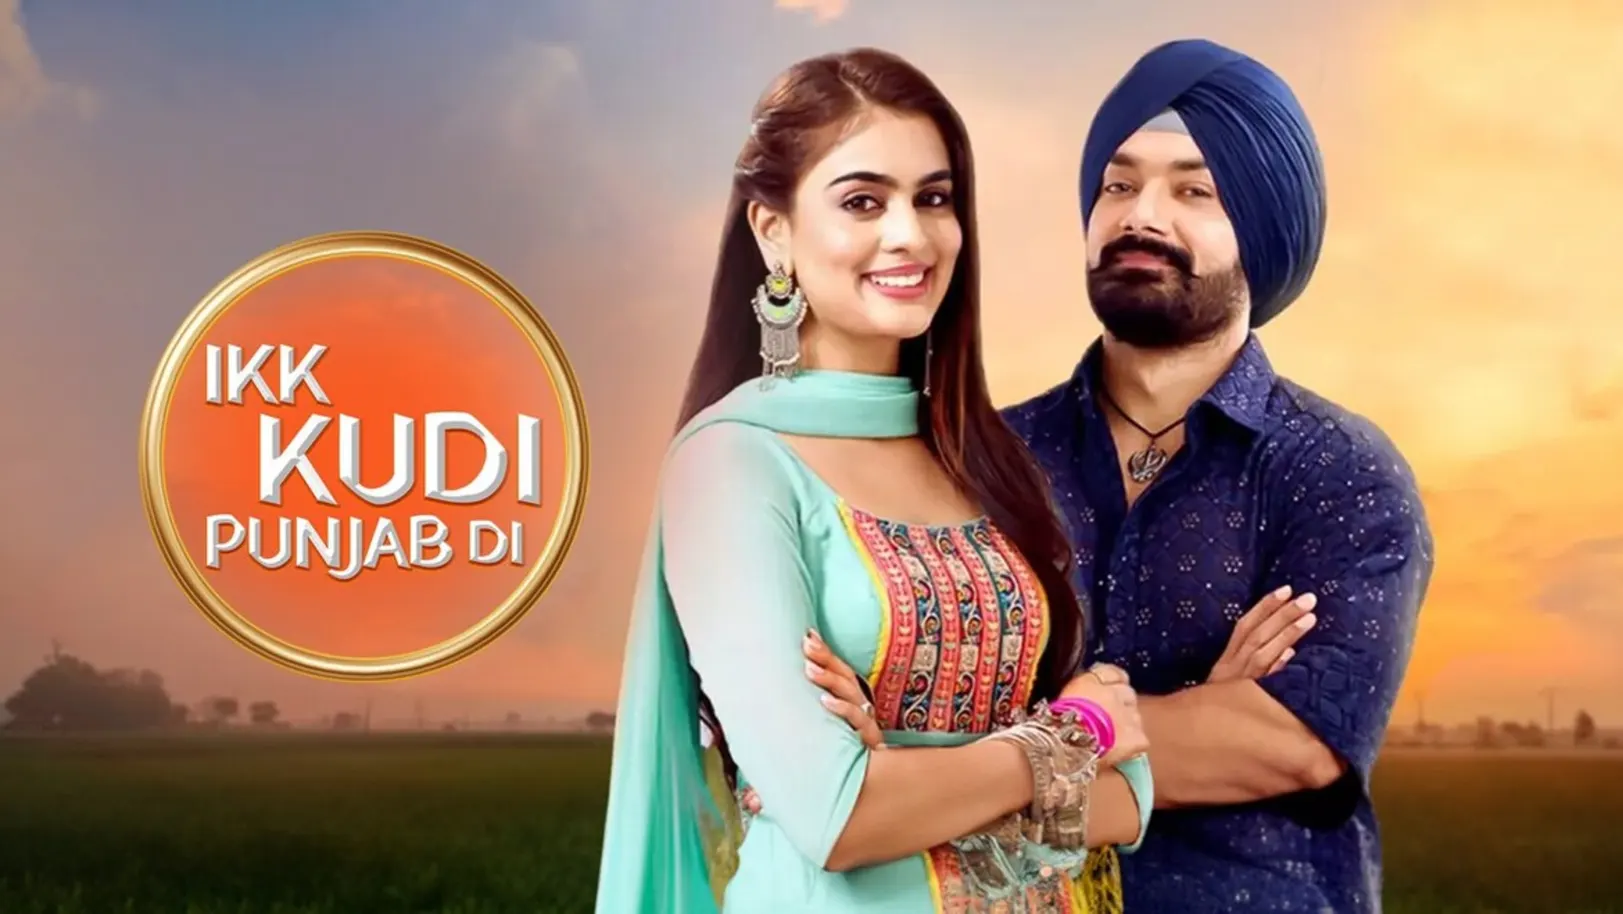 Ikk Kudi Punjab Di Streaming Now On Zee TV USA